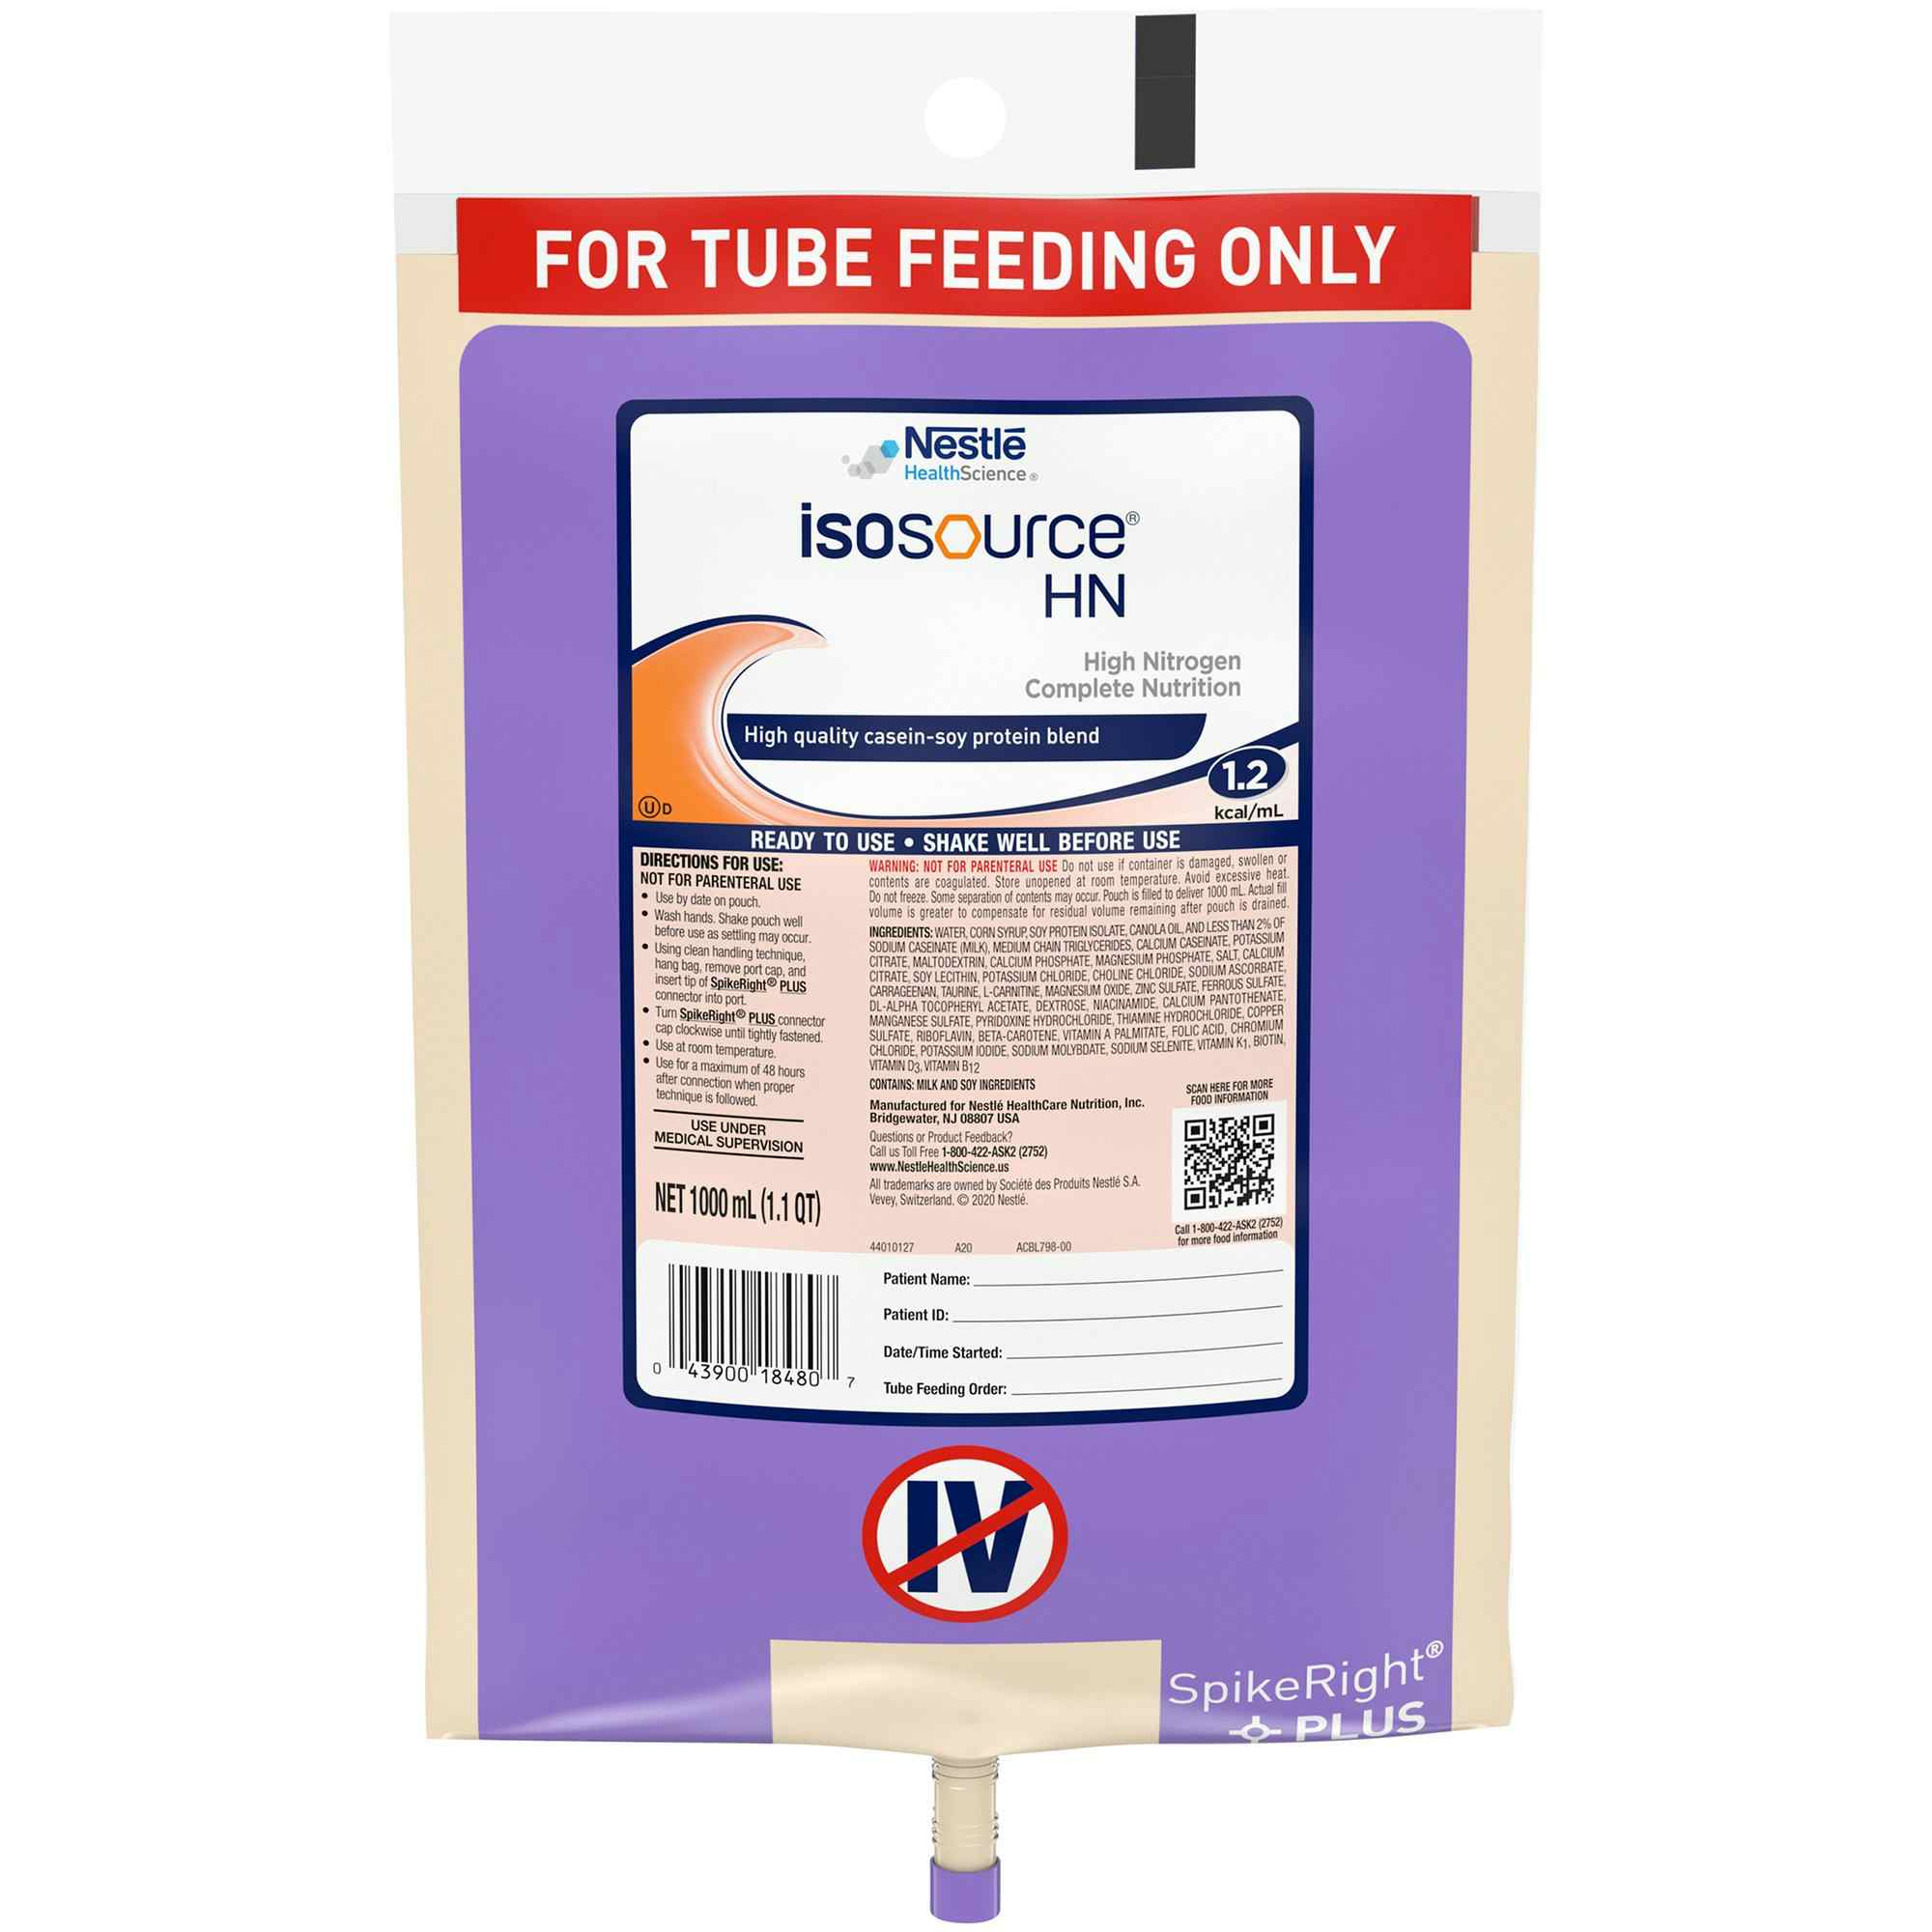 Nestle HealthScience Isosource HN High-Nitrogen Complete Nutrition Tube Feeding Formula, 10043900184804, 33.8 oz. - Case of 6